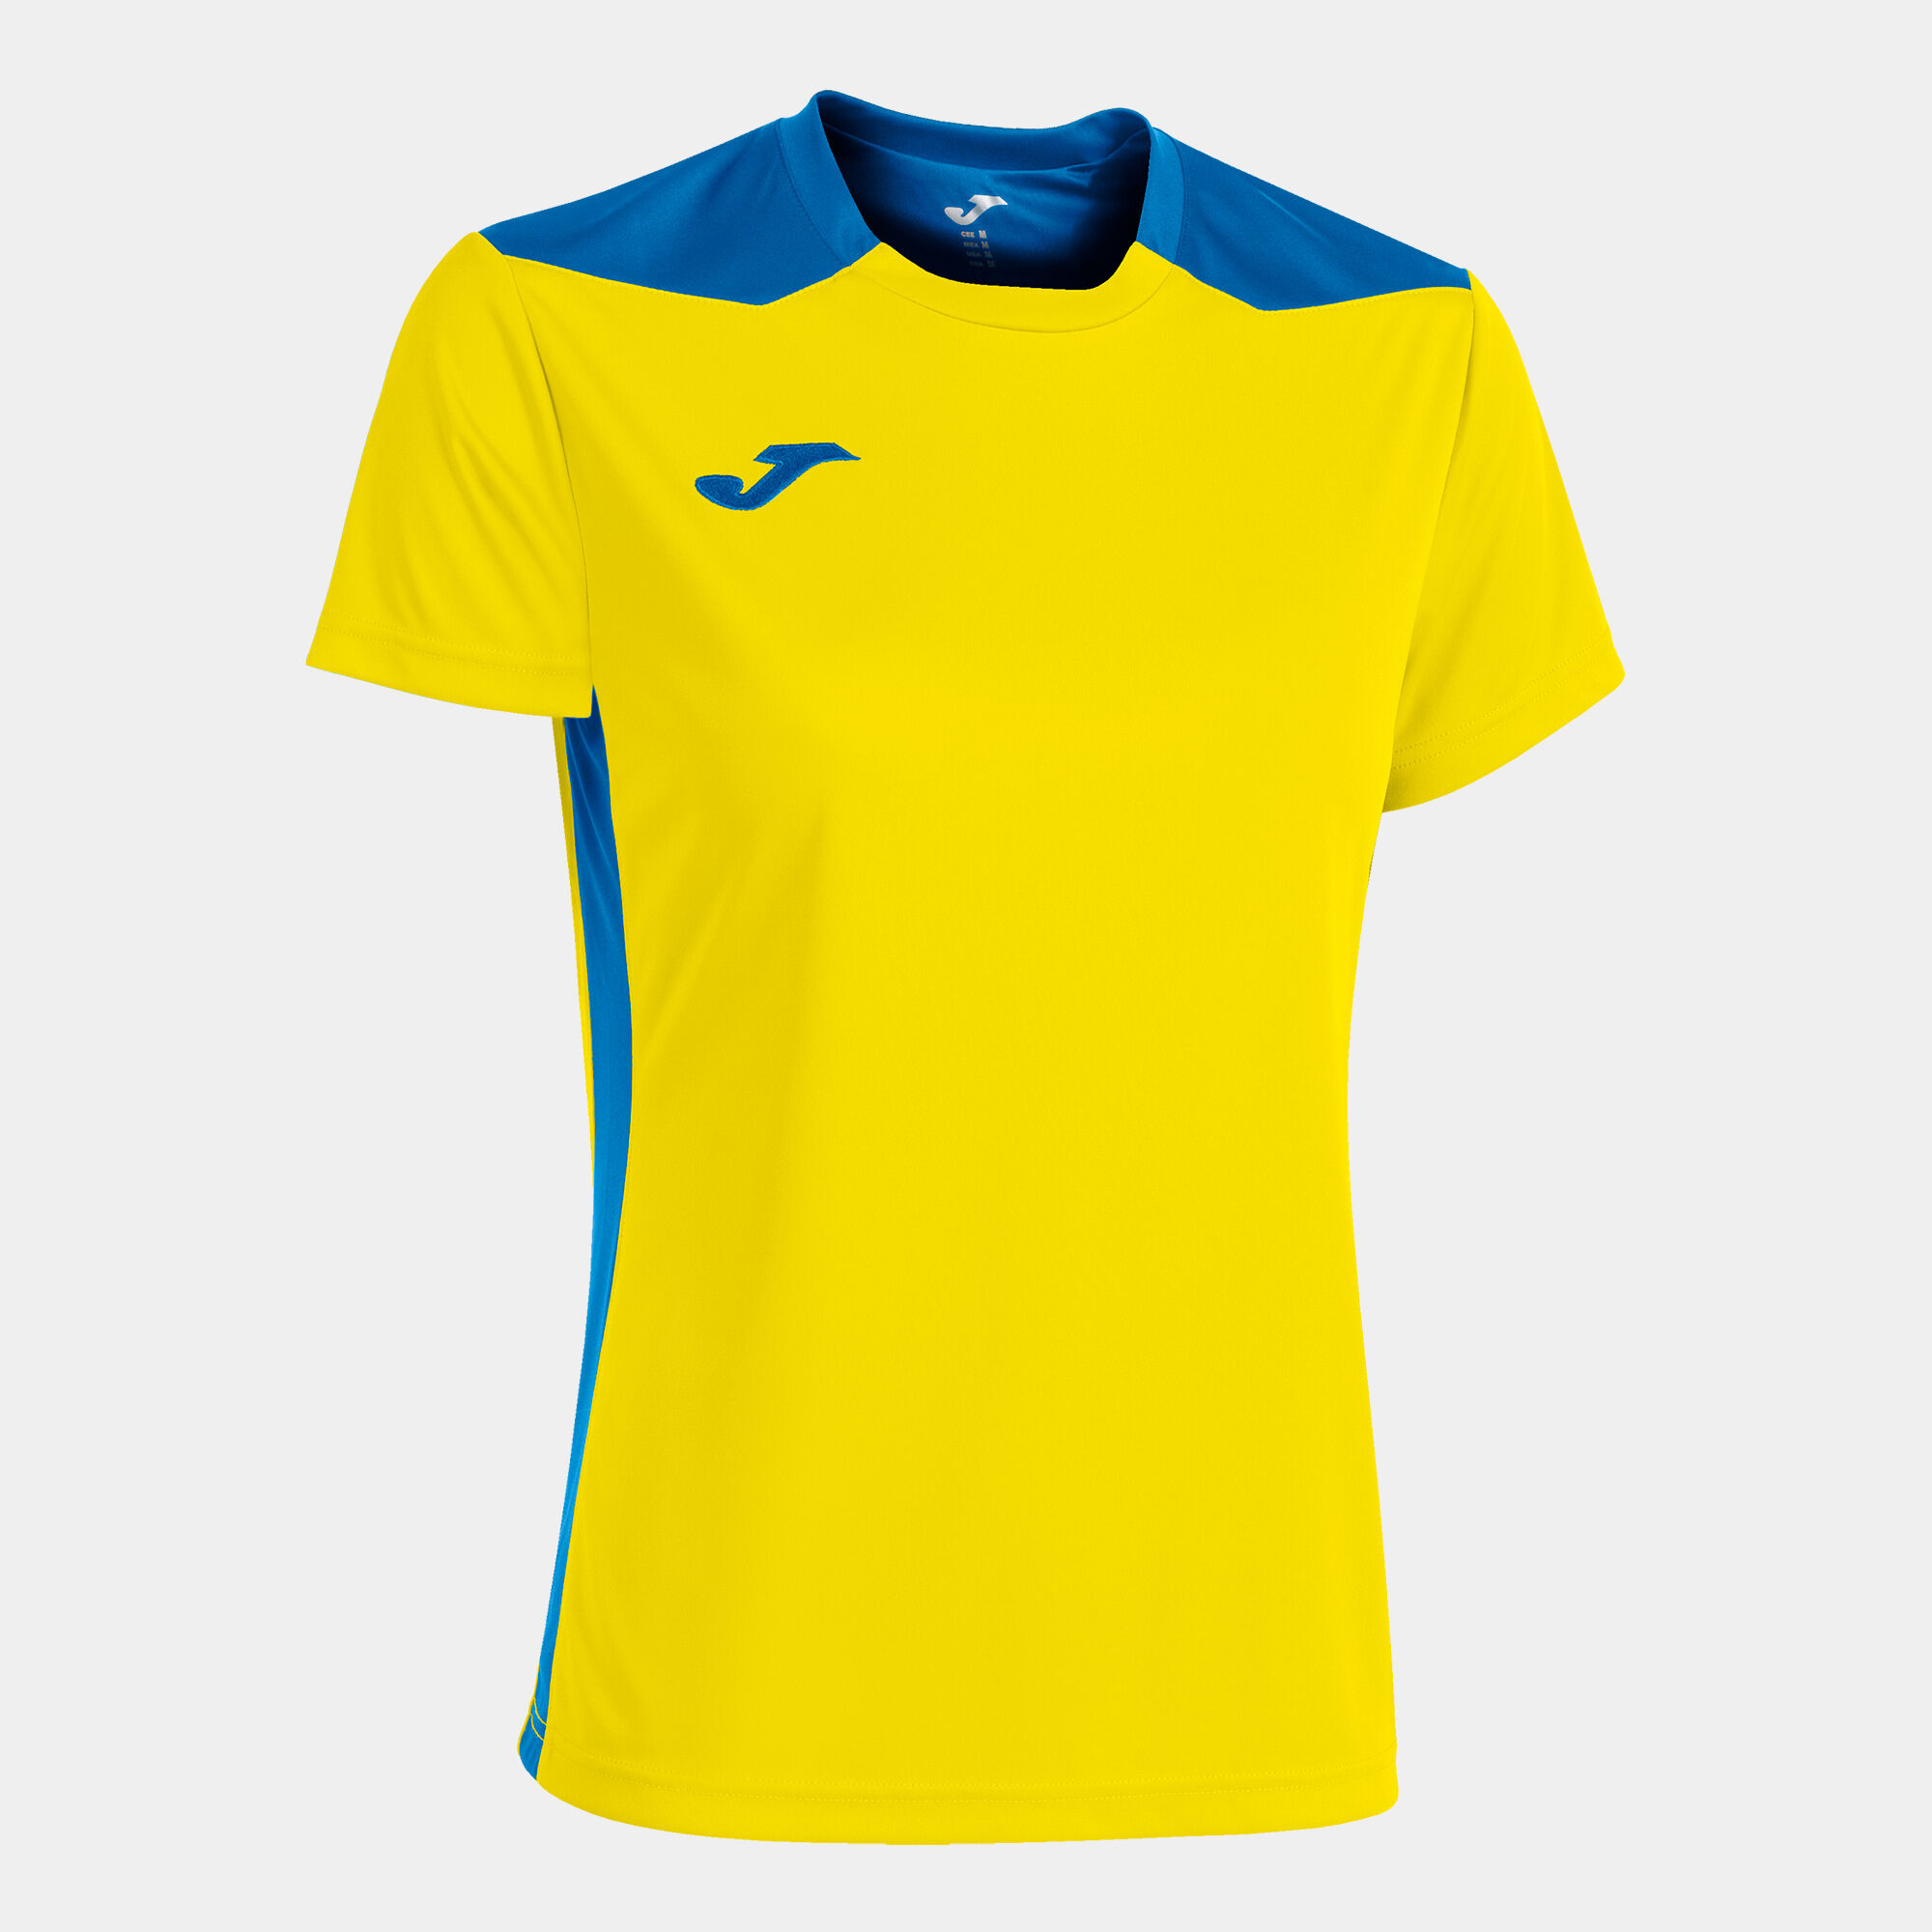 Shirt short sleeve woman Championship VI yellow royal blue